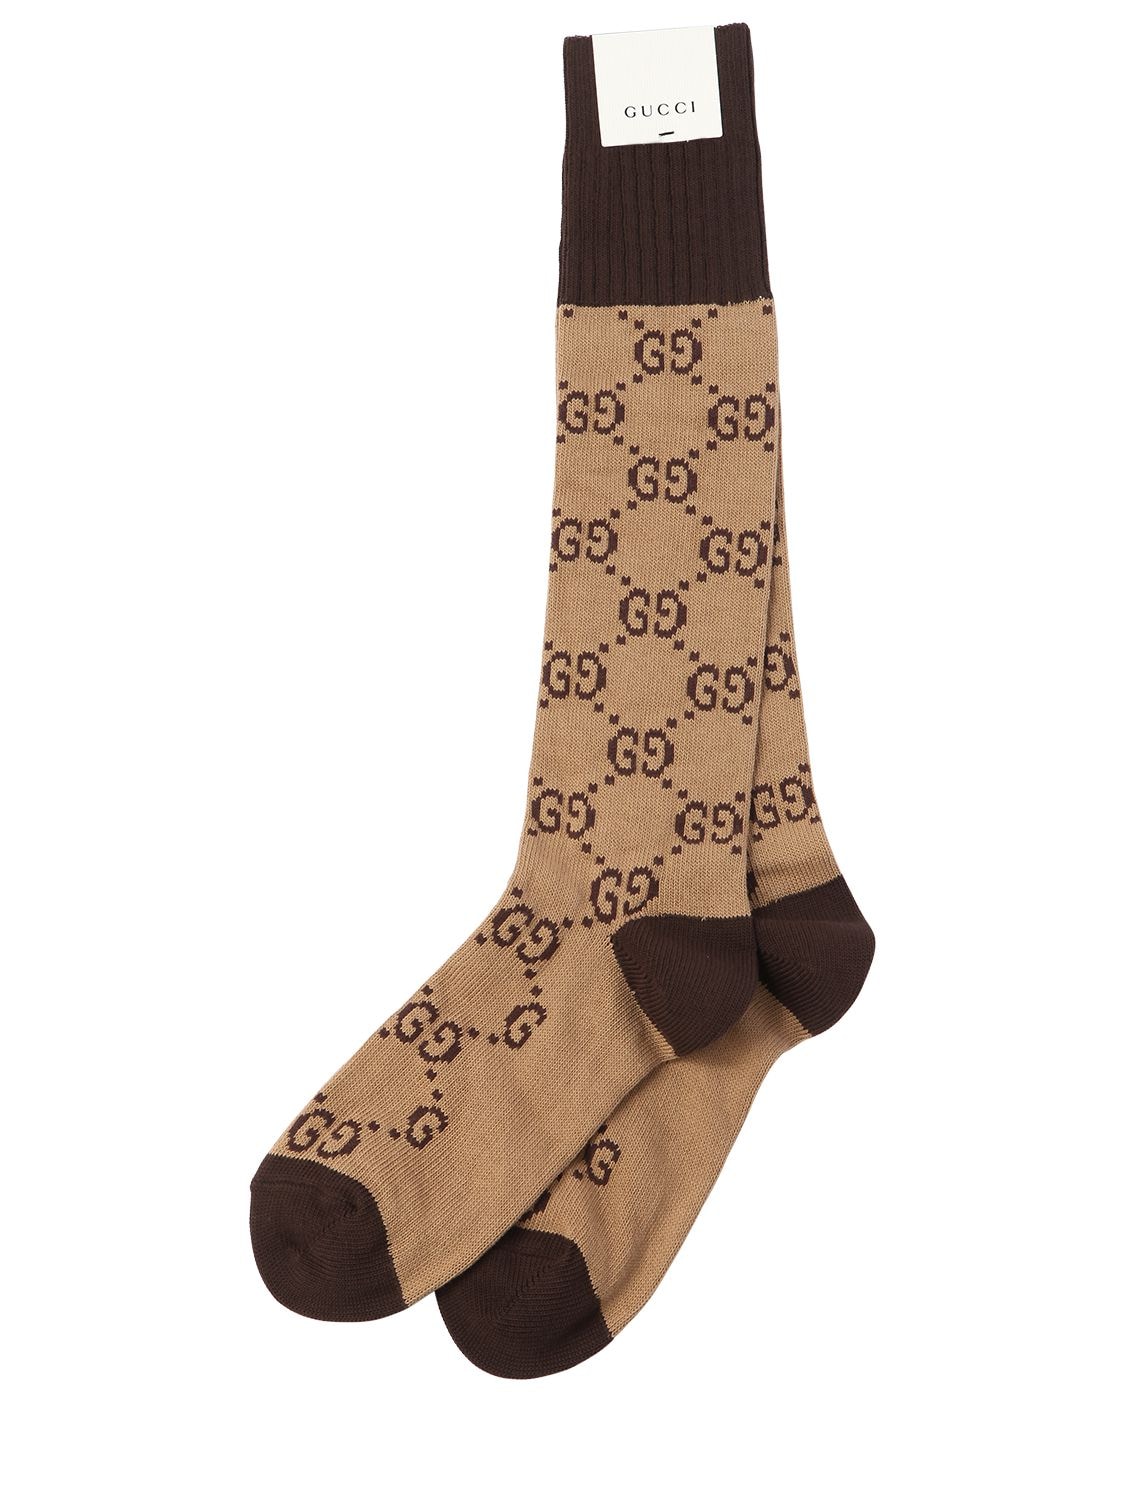 gucci socks on sale